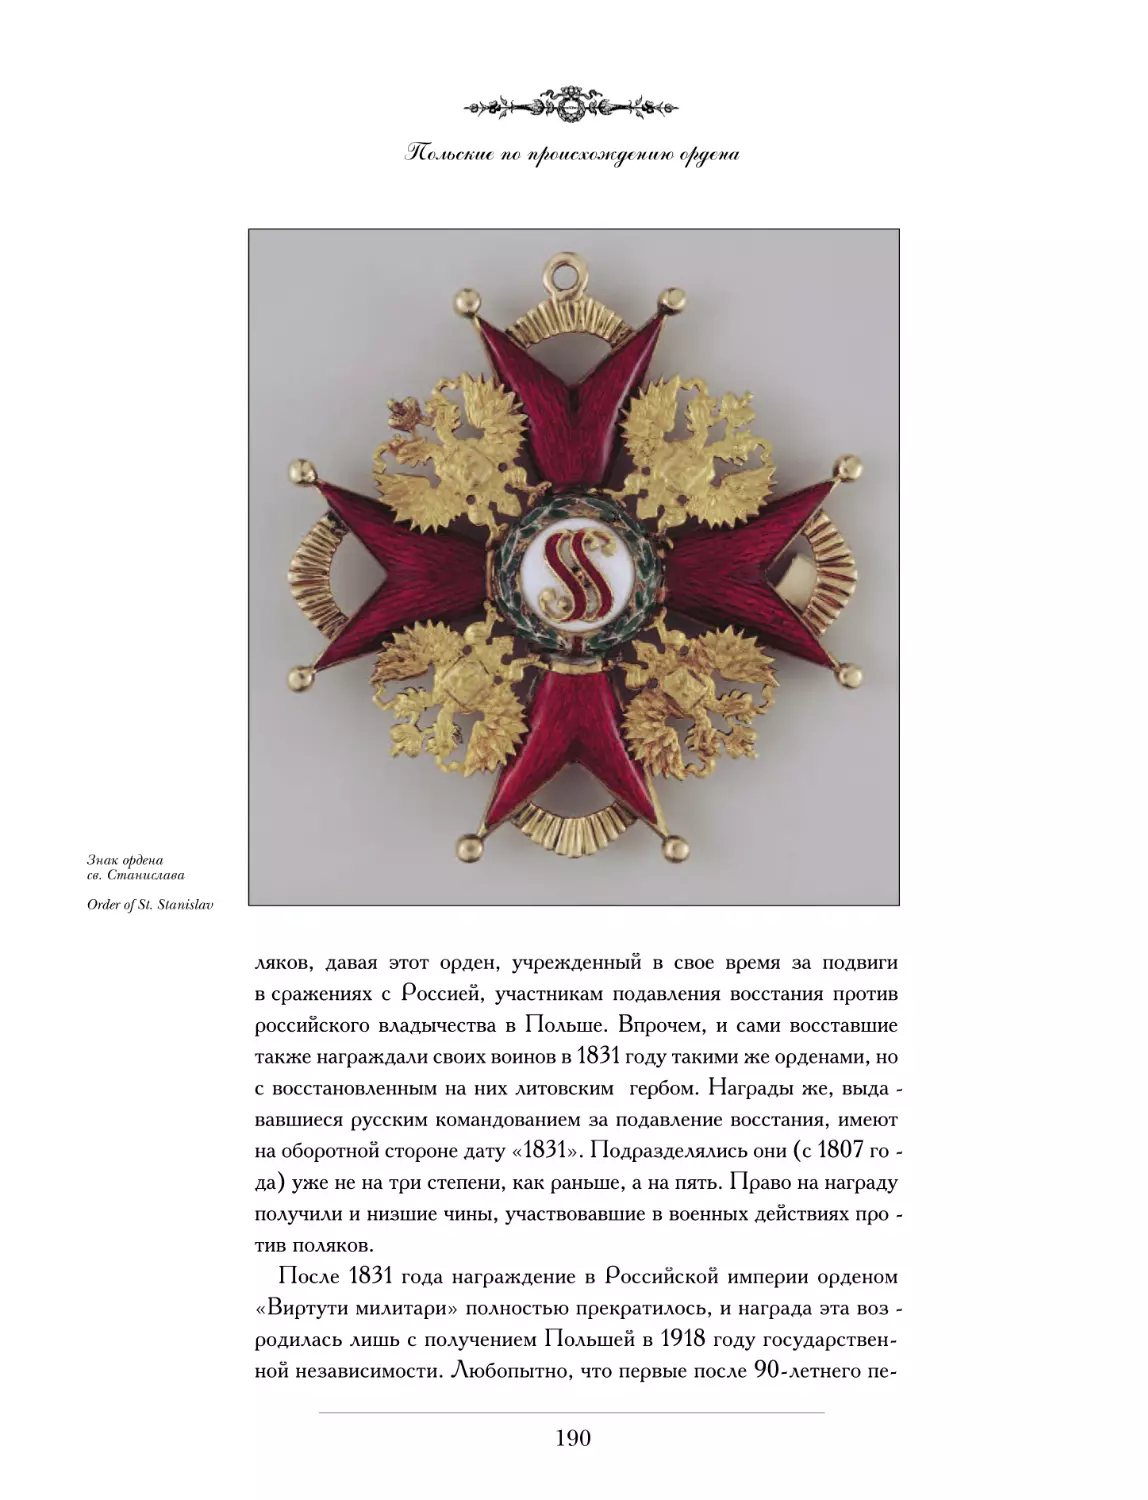 Орден Военного креста («Виртути милитари»